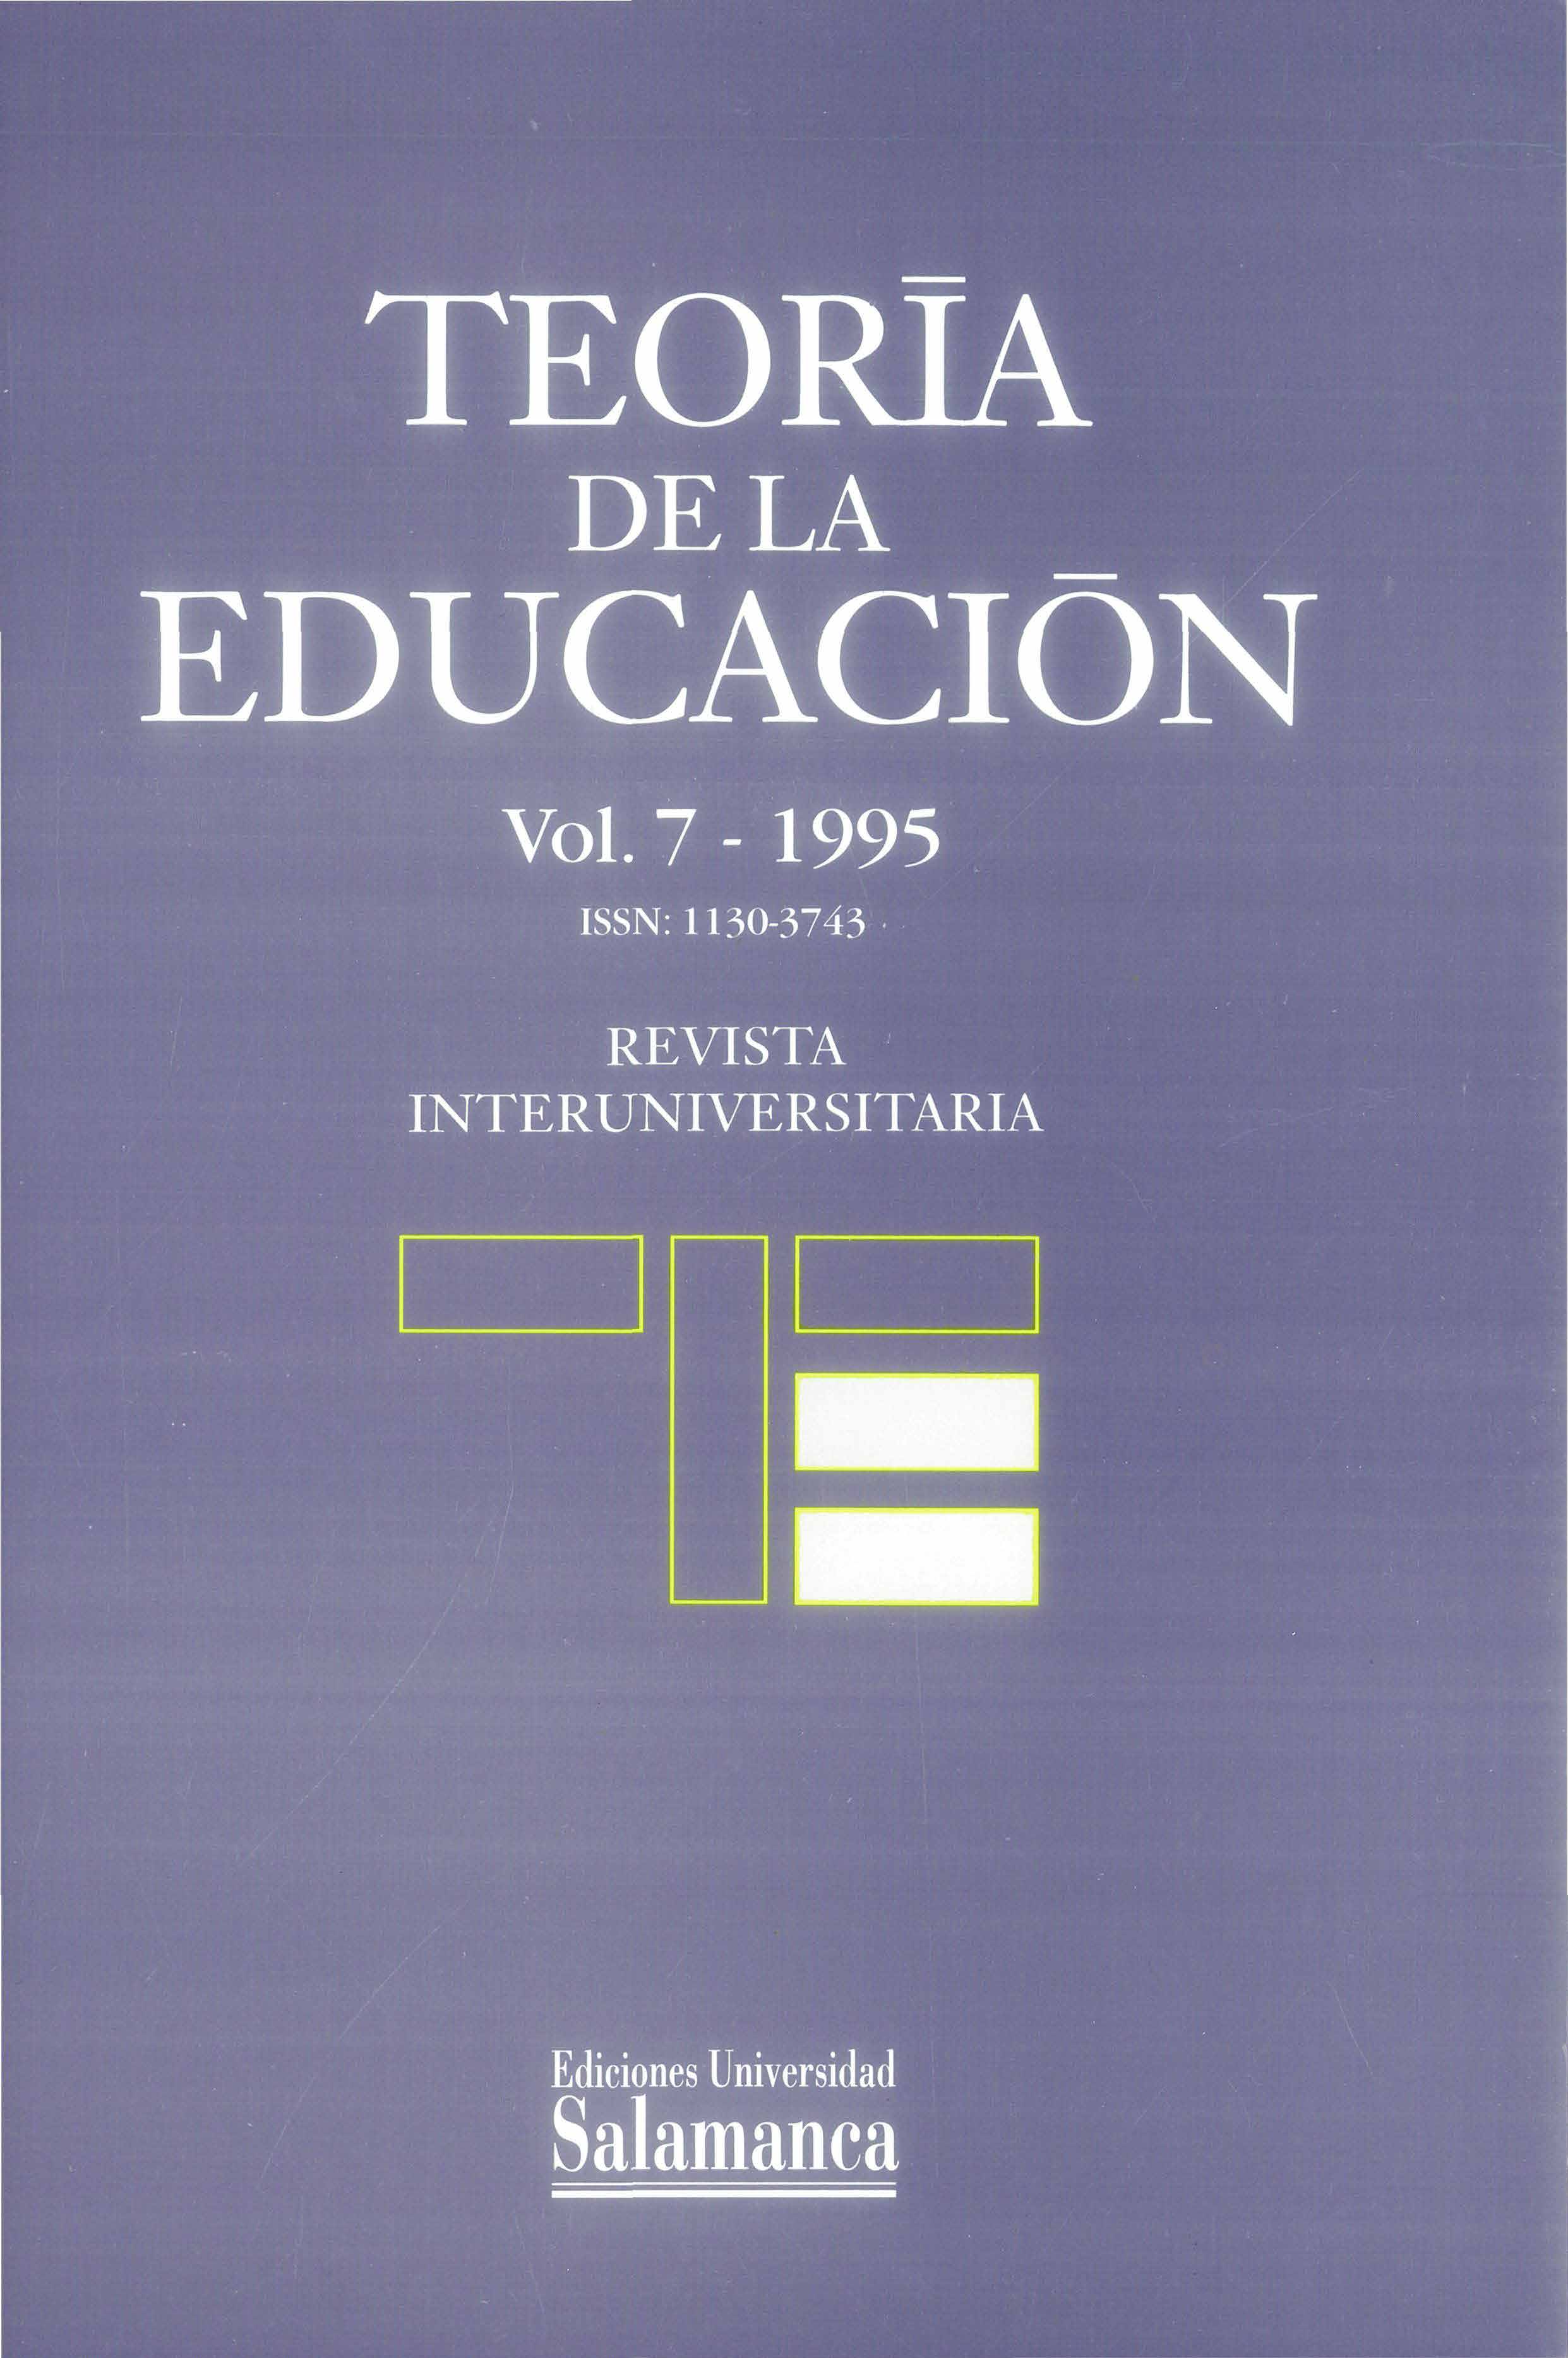                         Ver Vol. 7 (1995)
                    